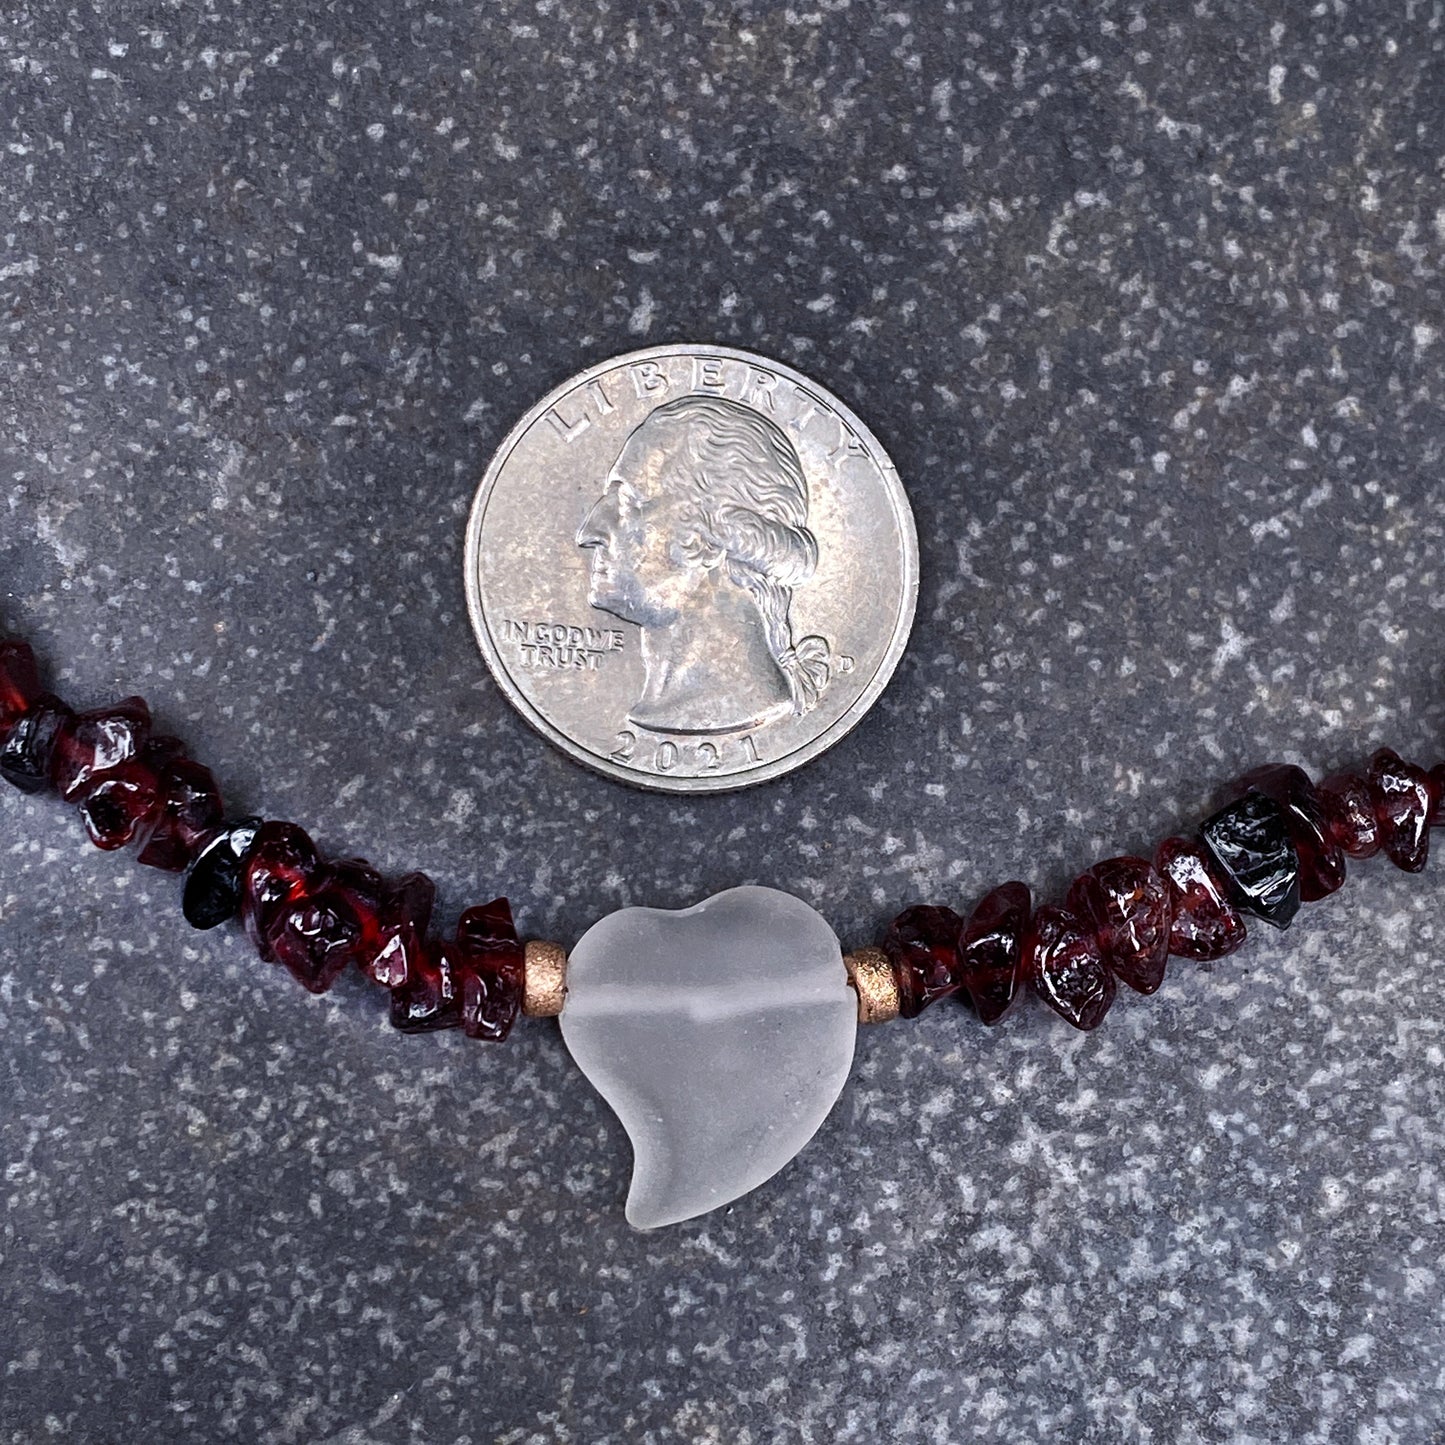 Garnet with Quartz Heart Necklace